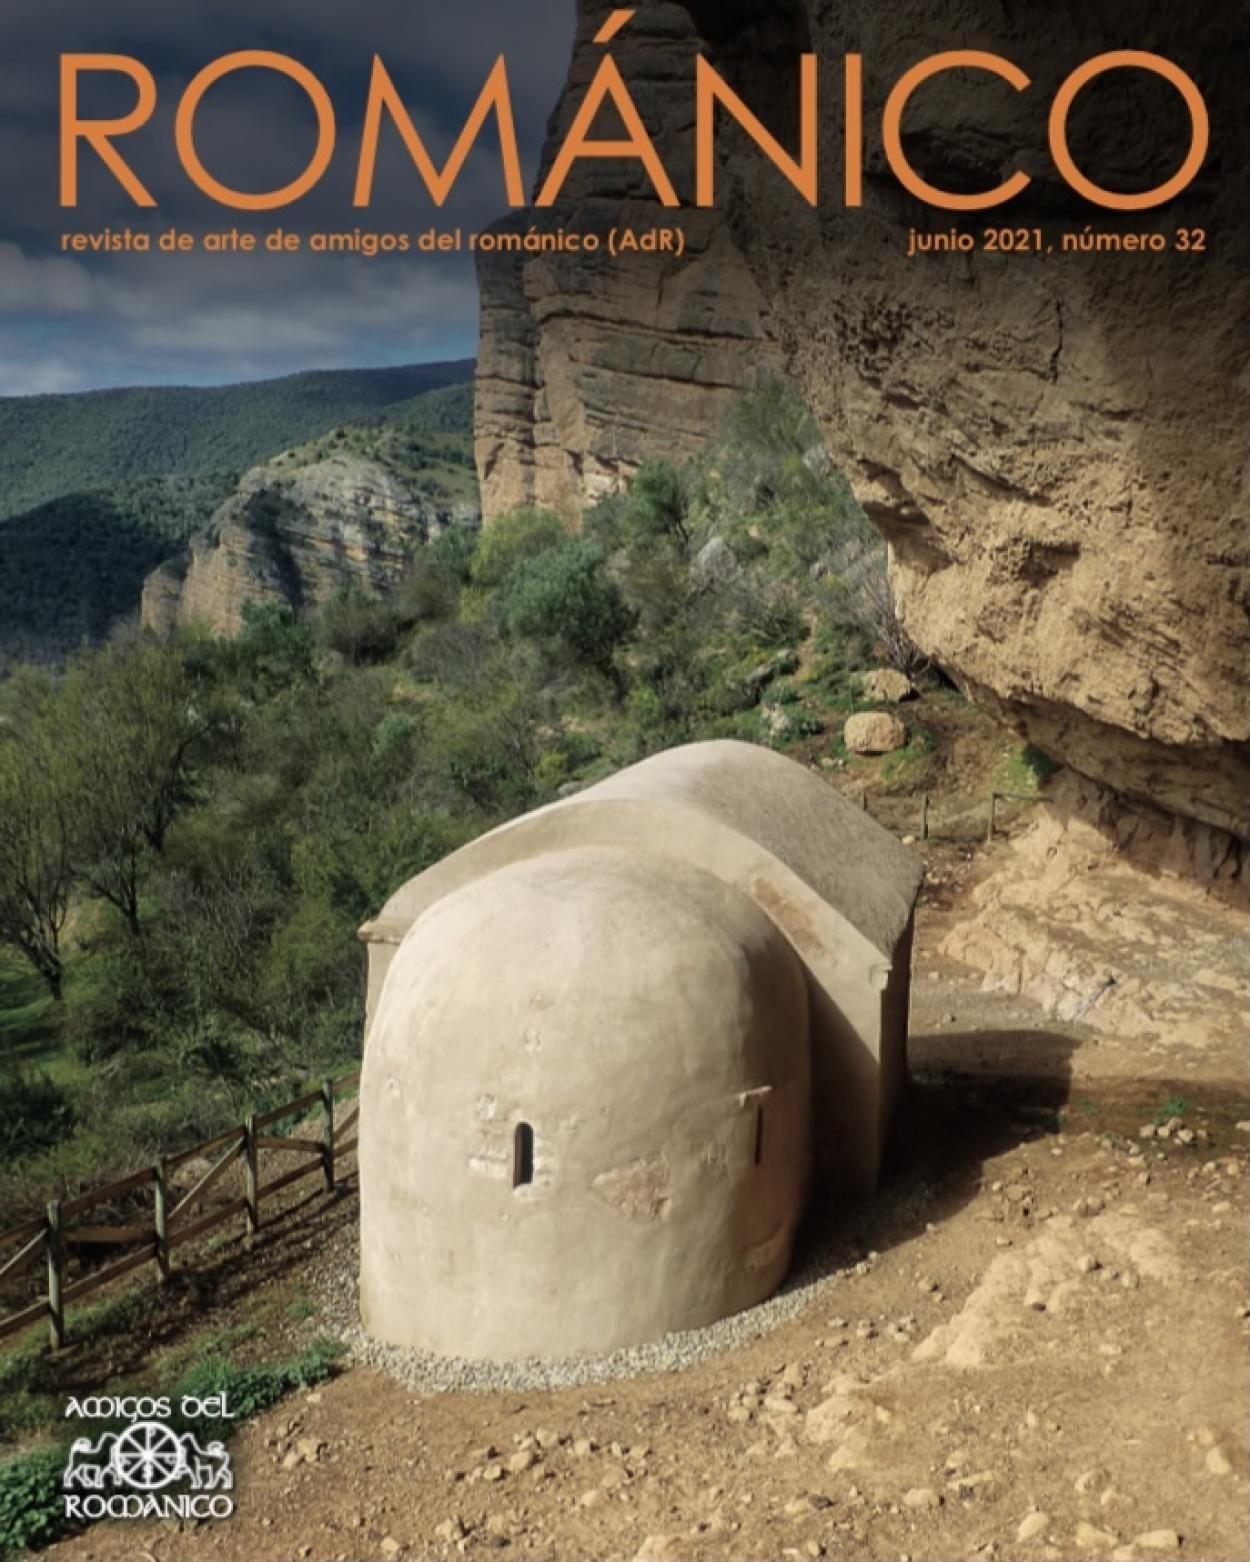 Románico nº 32 "Revista de Arte de Amigos del Románico (AdR)"